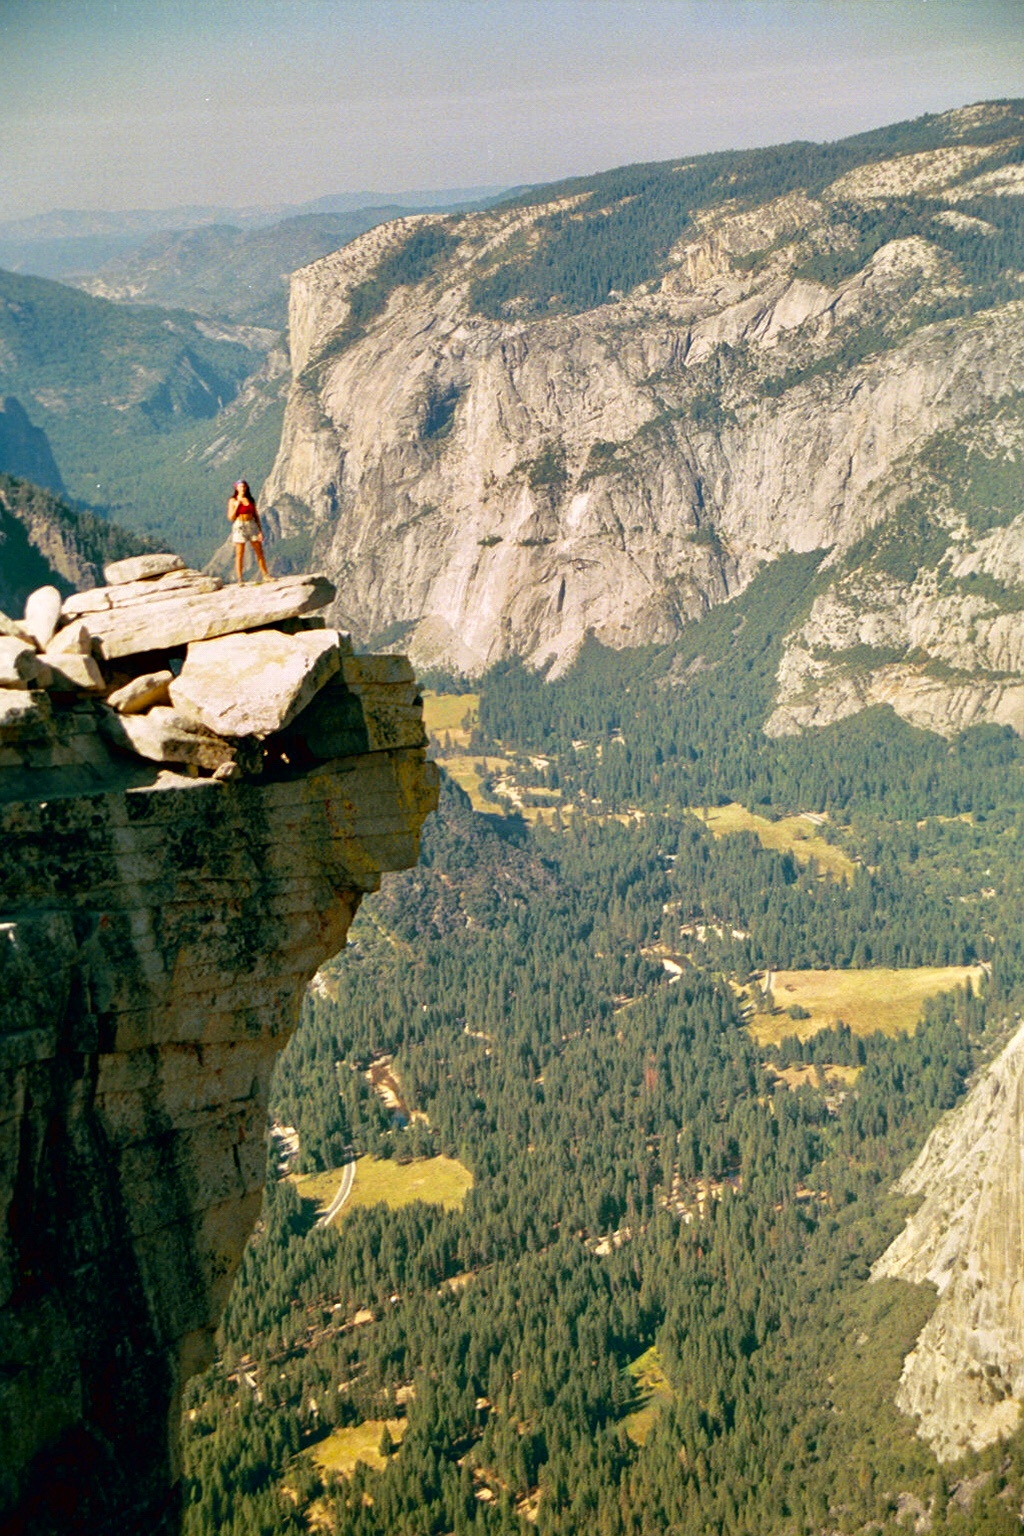 above Yosemite Valley